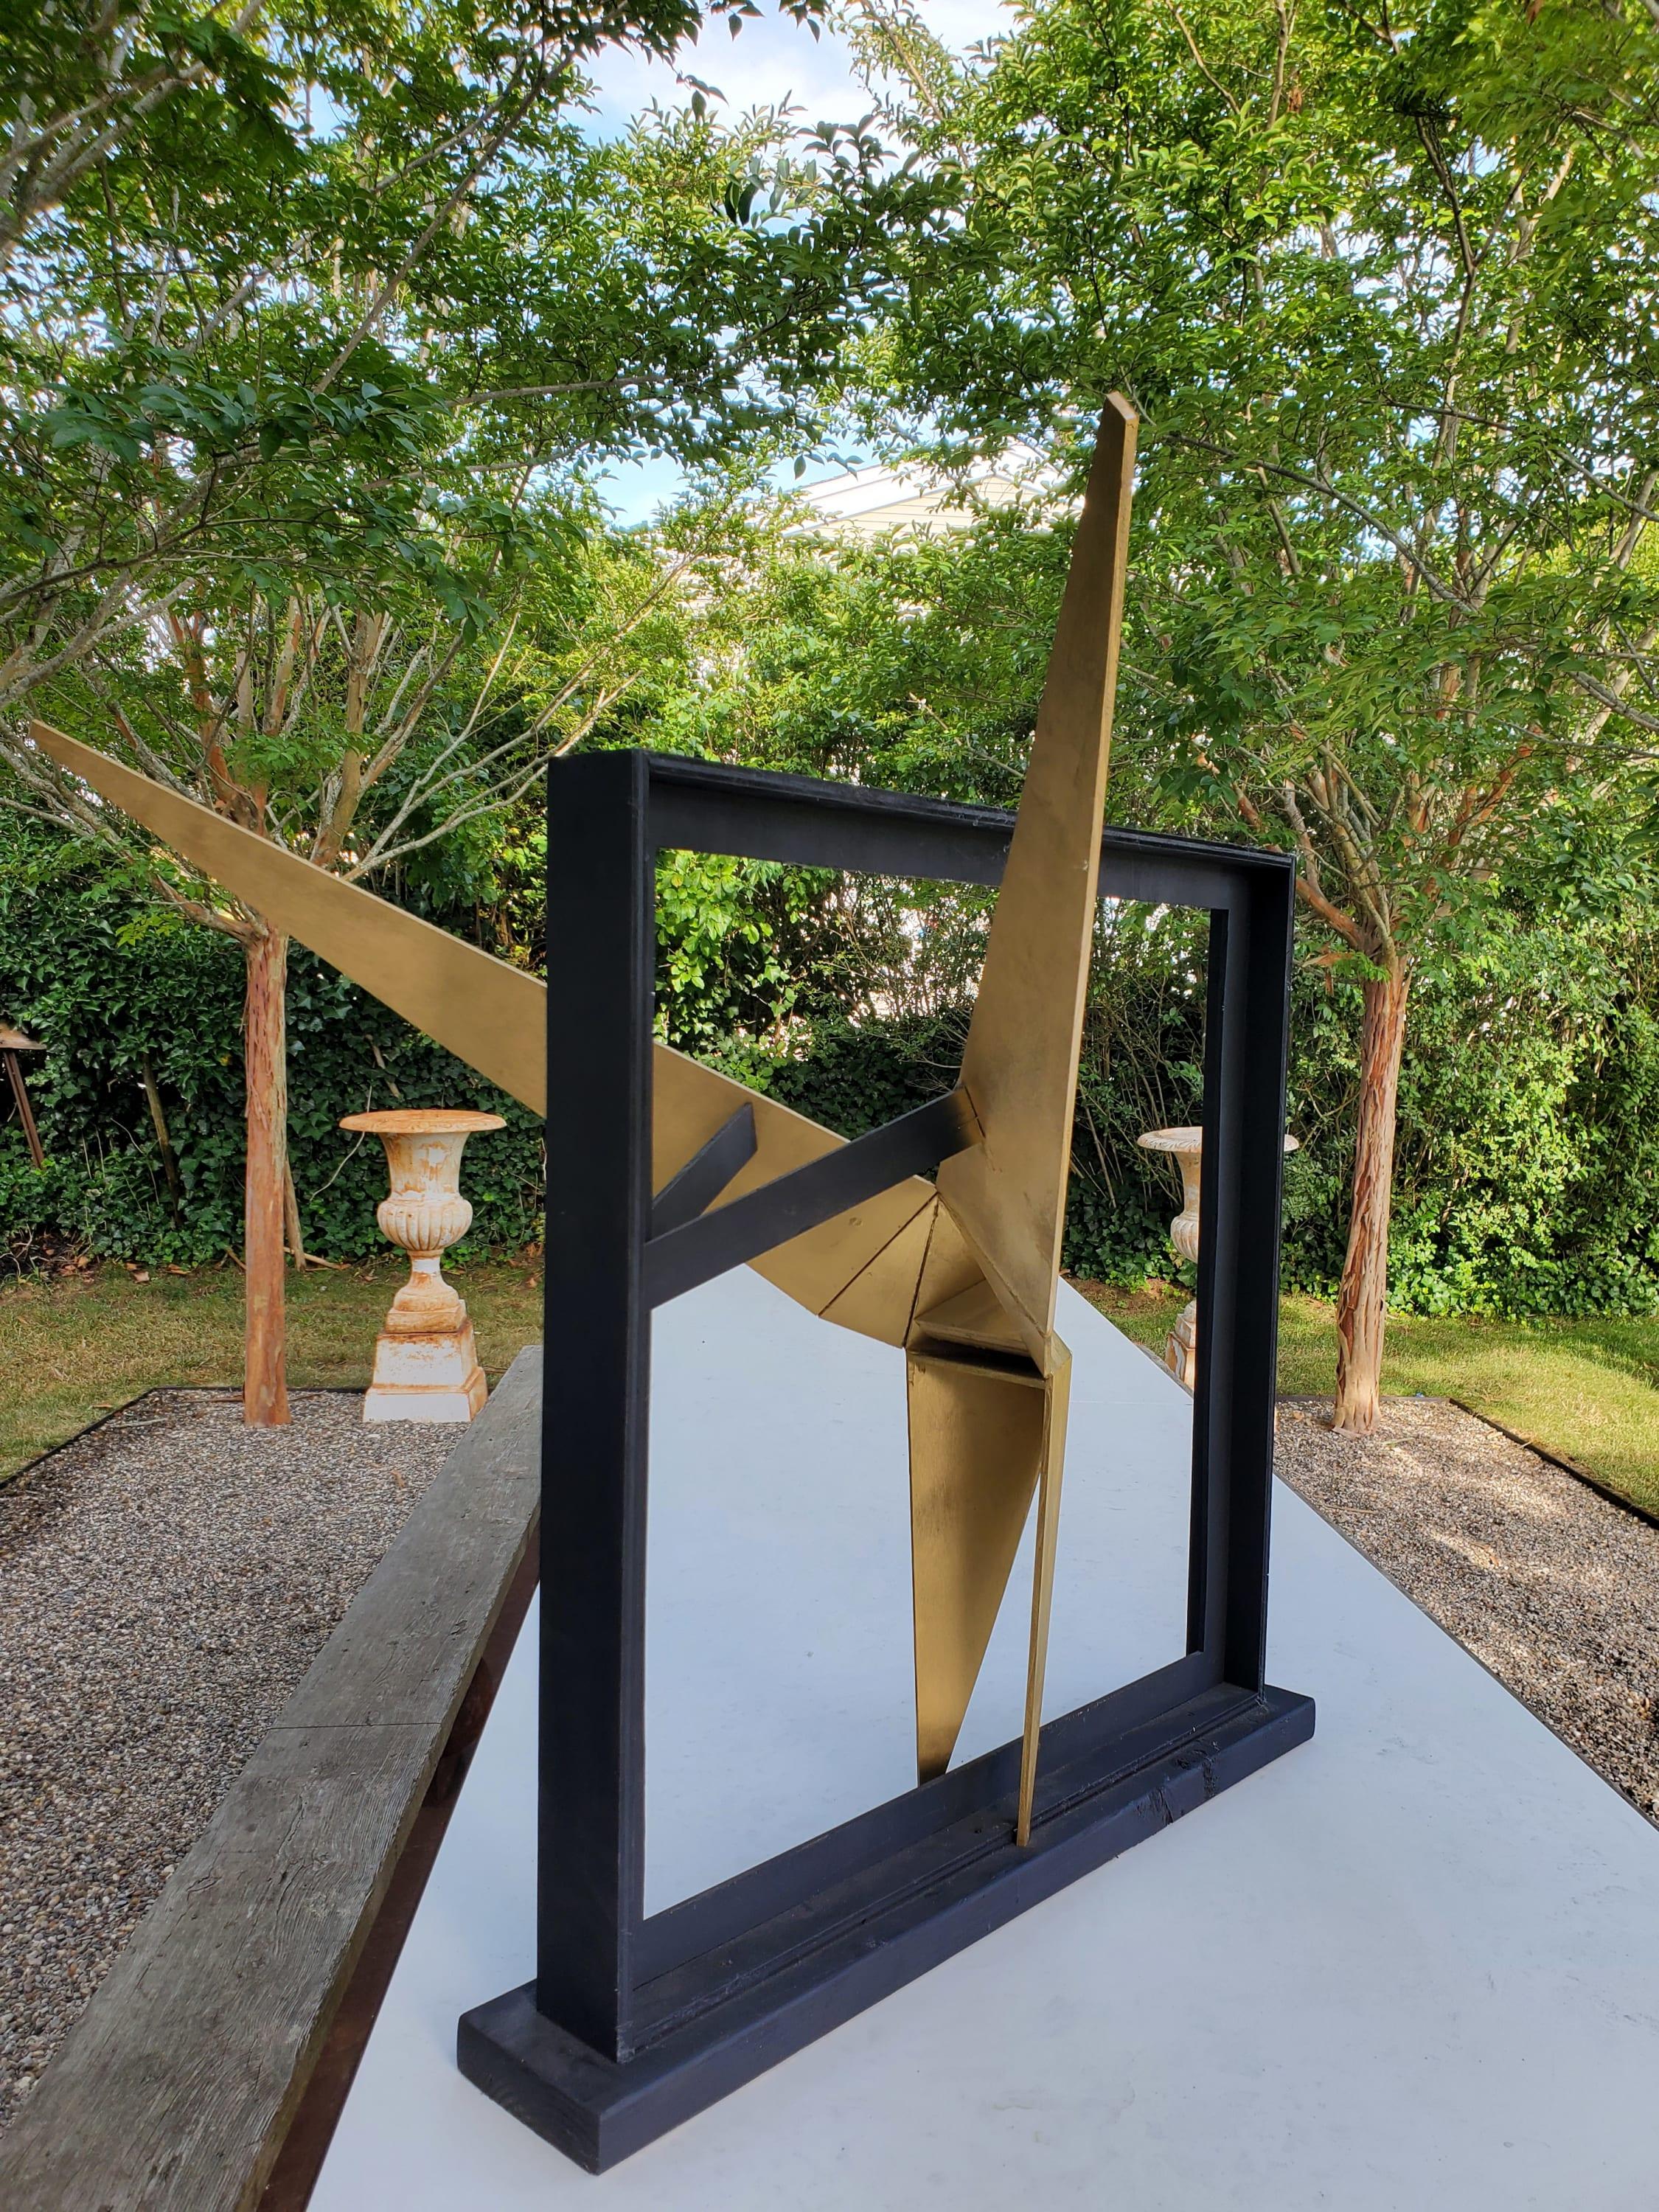 Goldene Ballerina – Sculpture von J. Oscar Molina